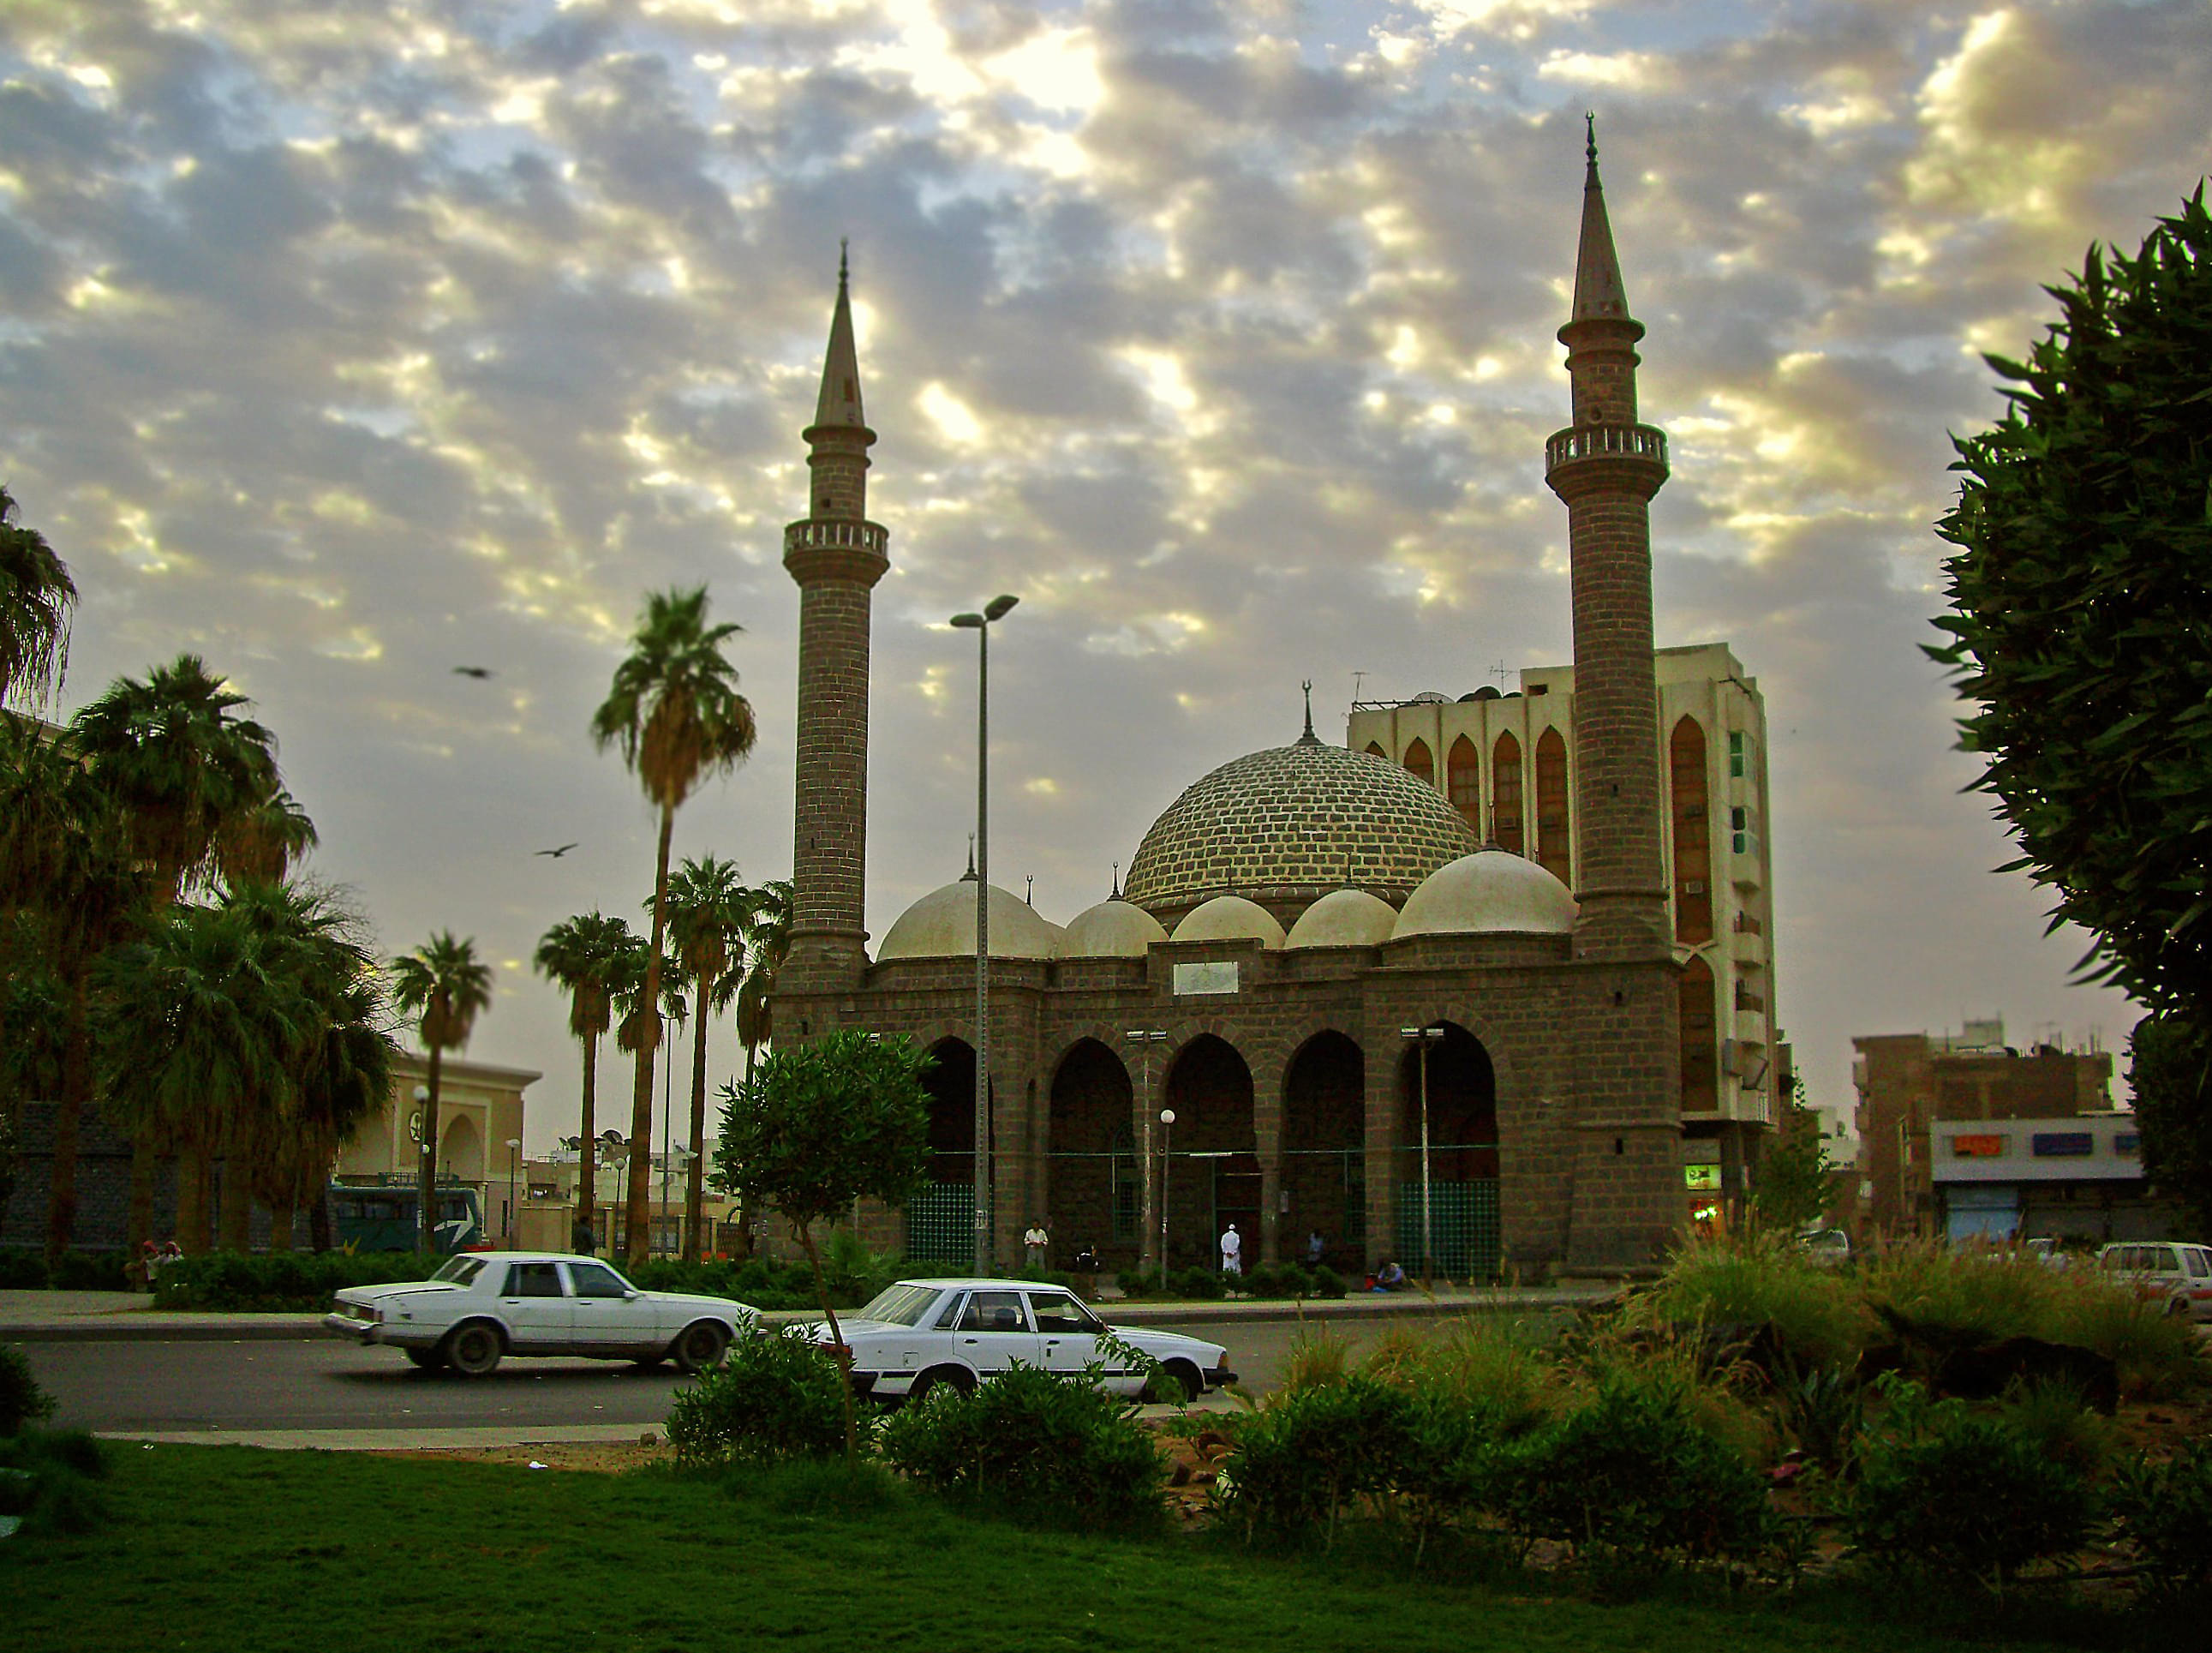 Anbariya Mosque